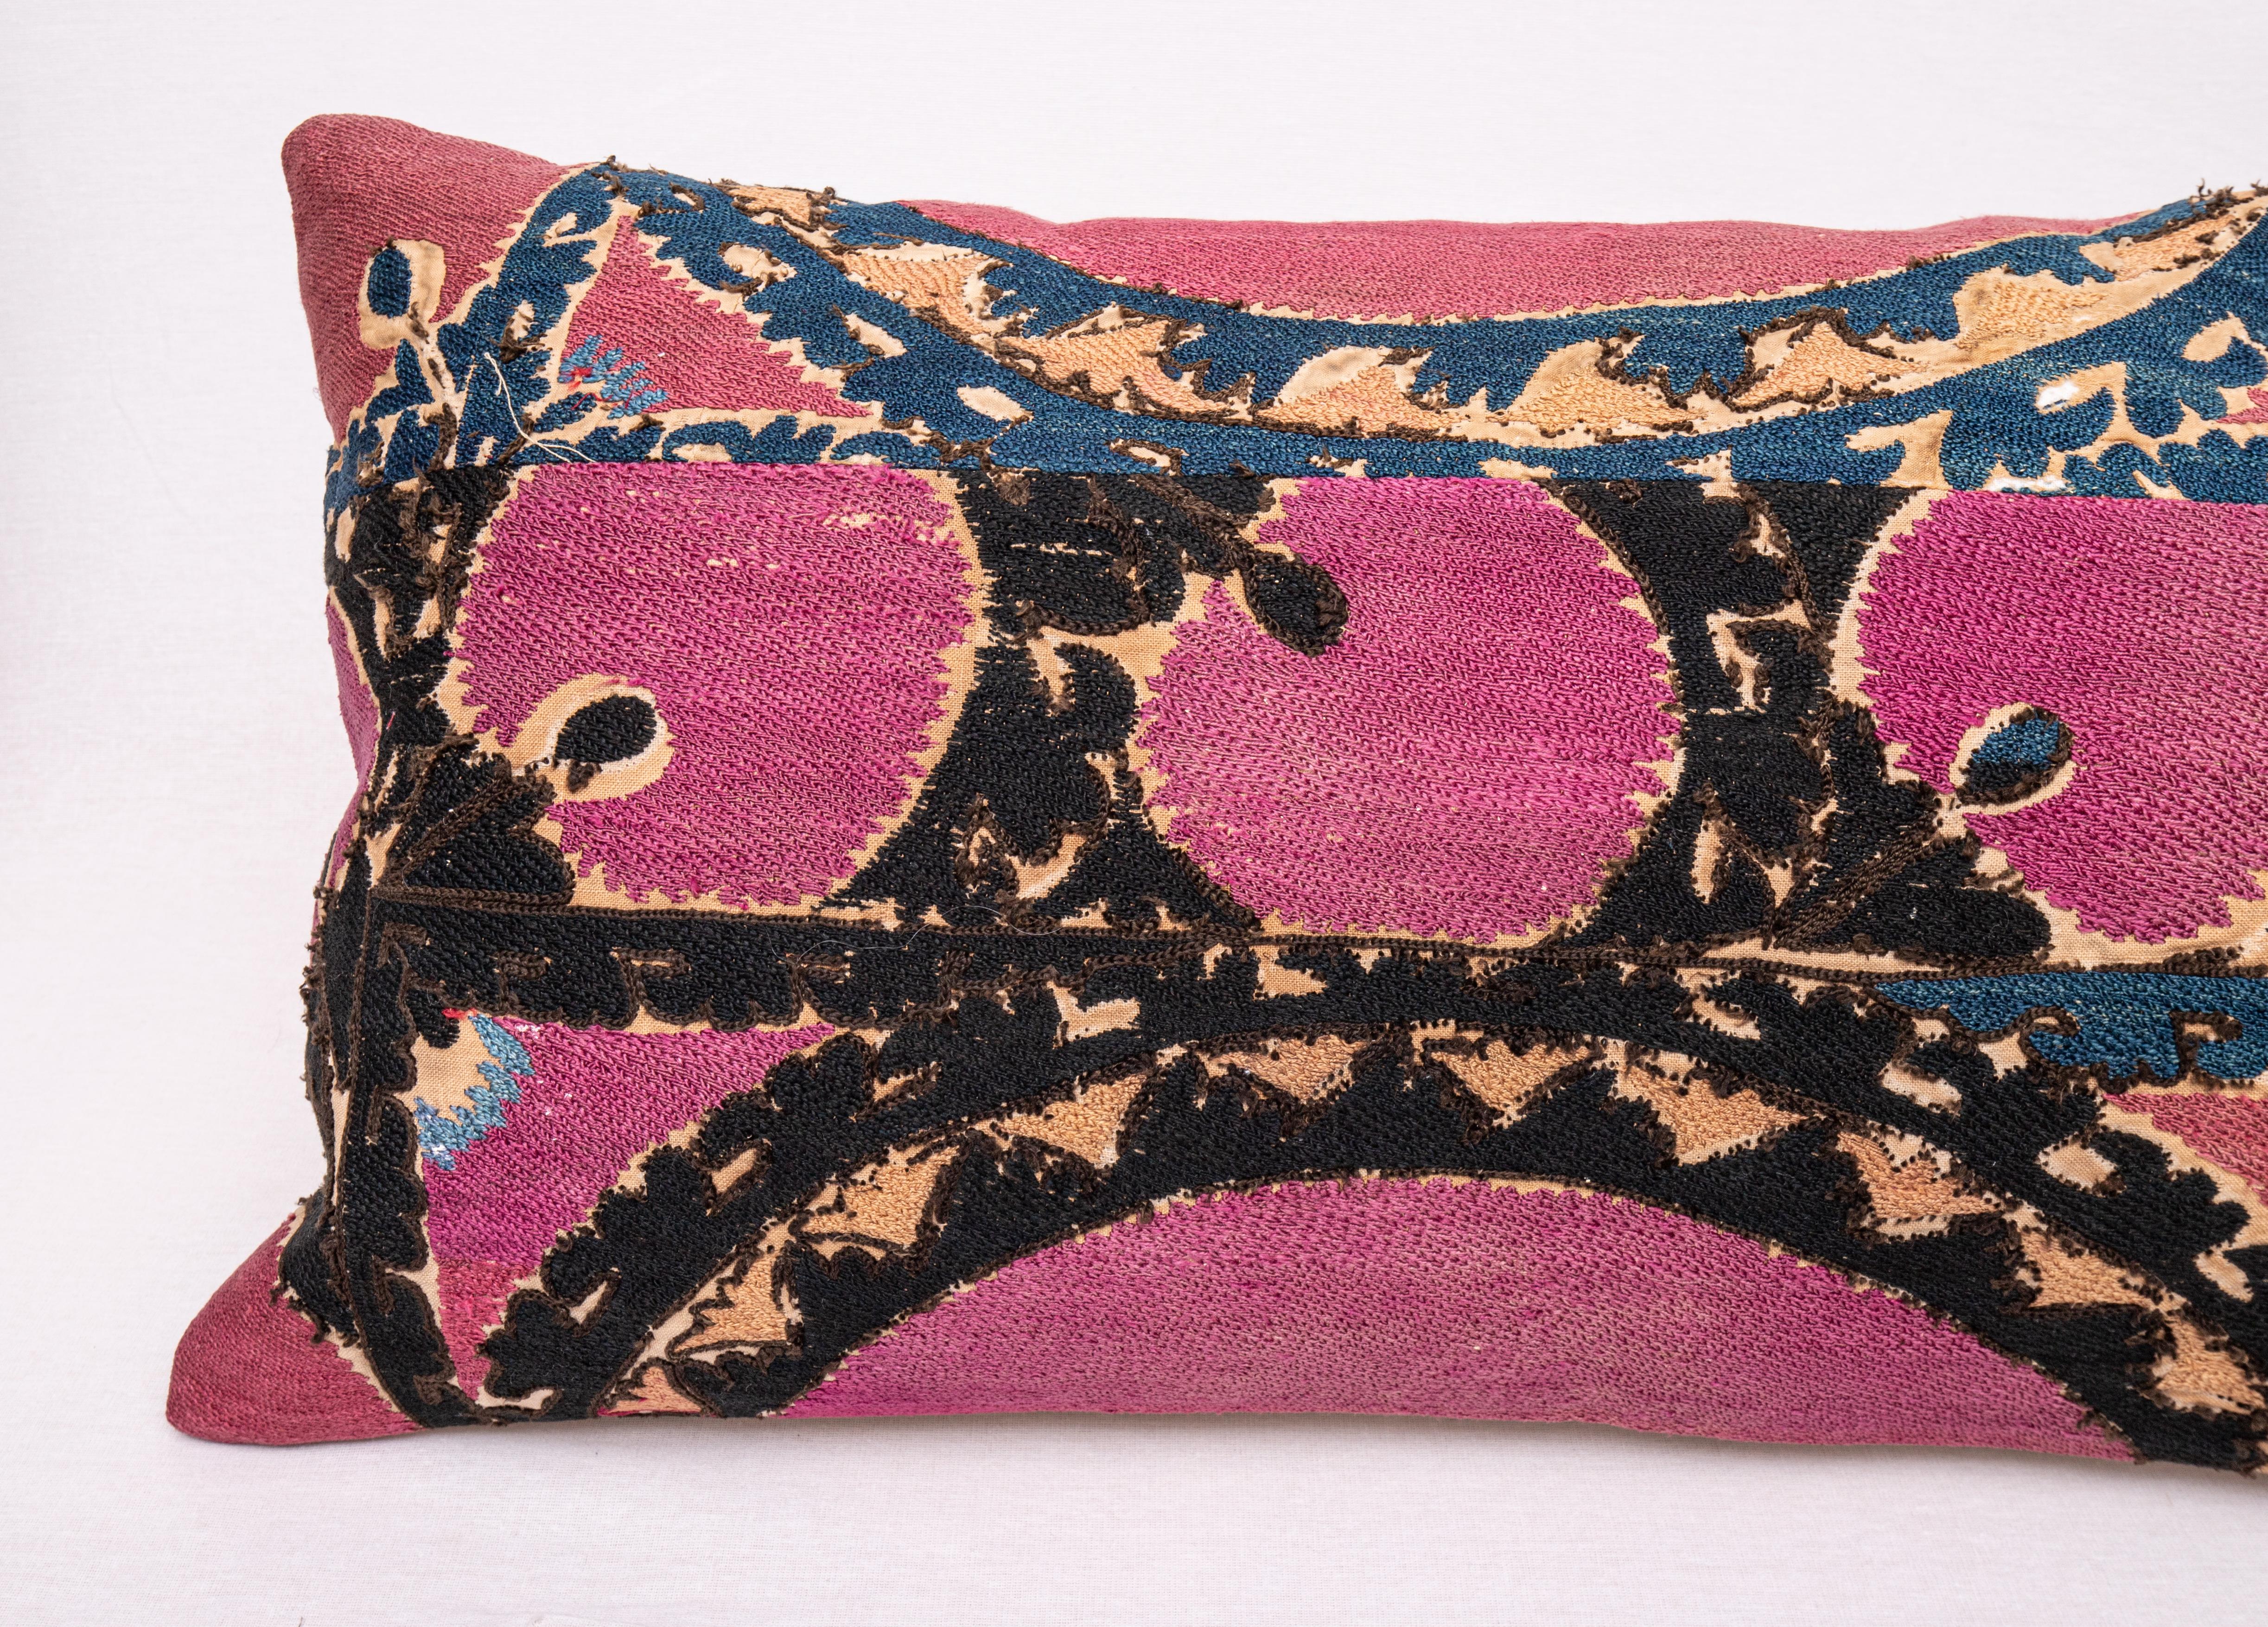 Uzbek Antique Suzani Pillowcase Made from a late 19th C. Tashkent Suzani Fragment